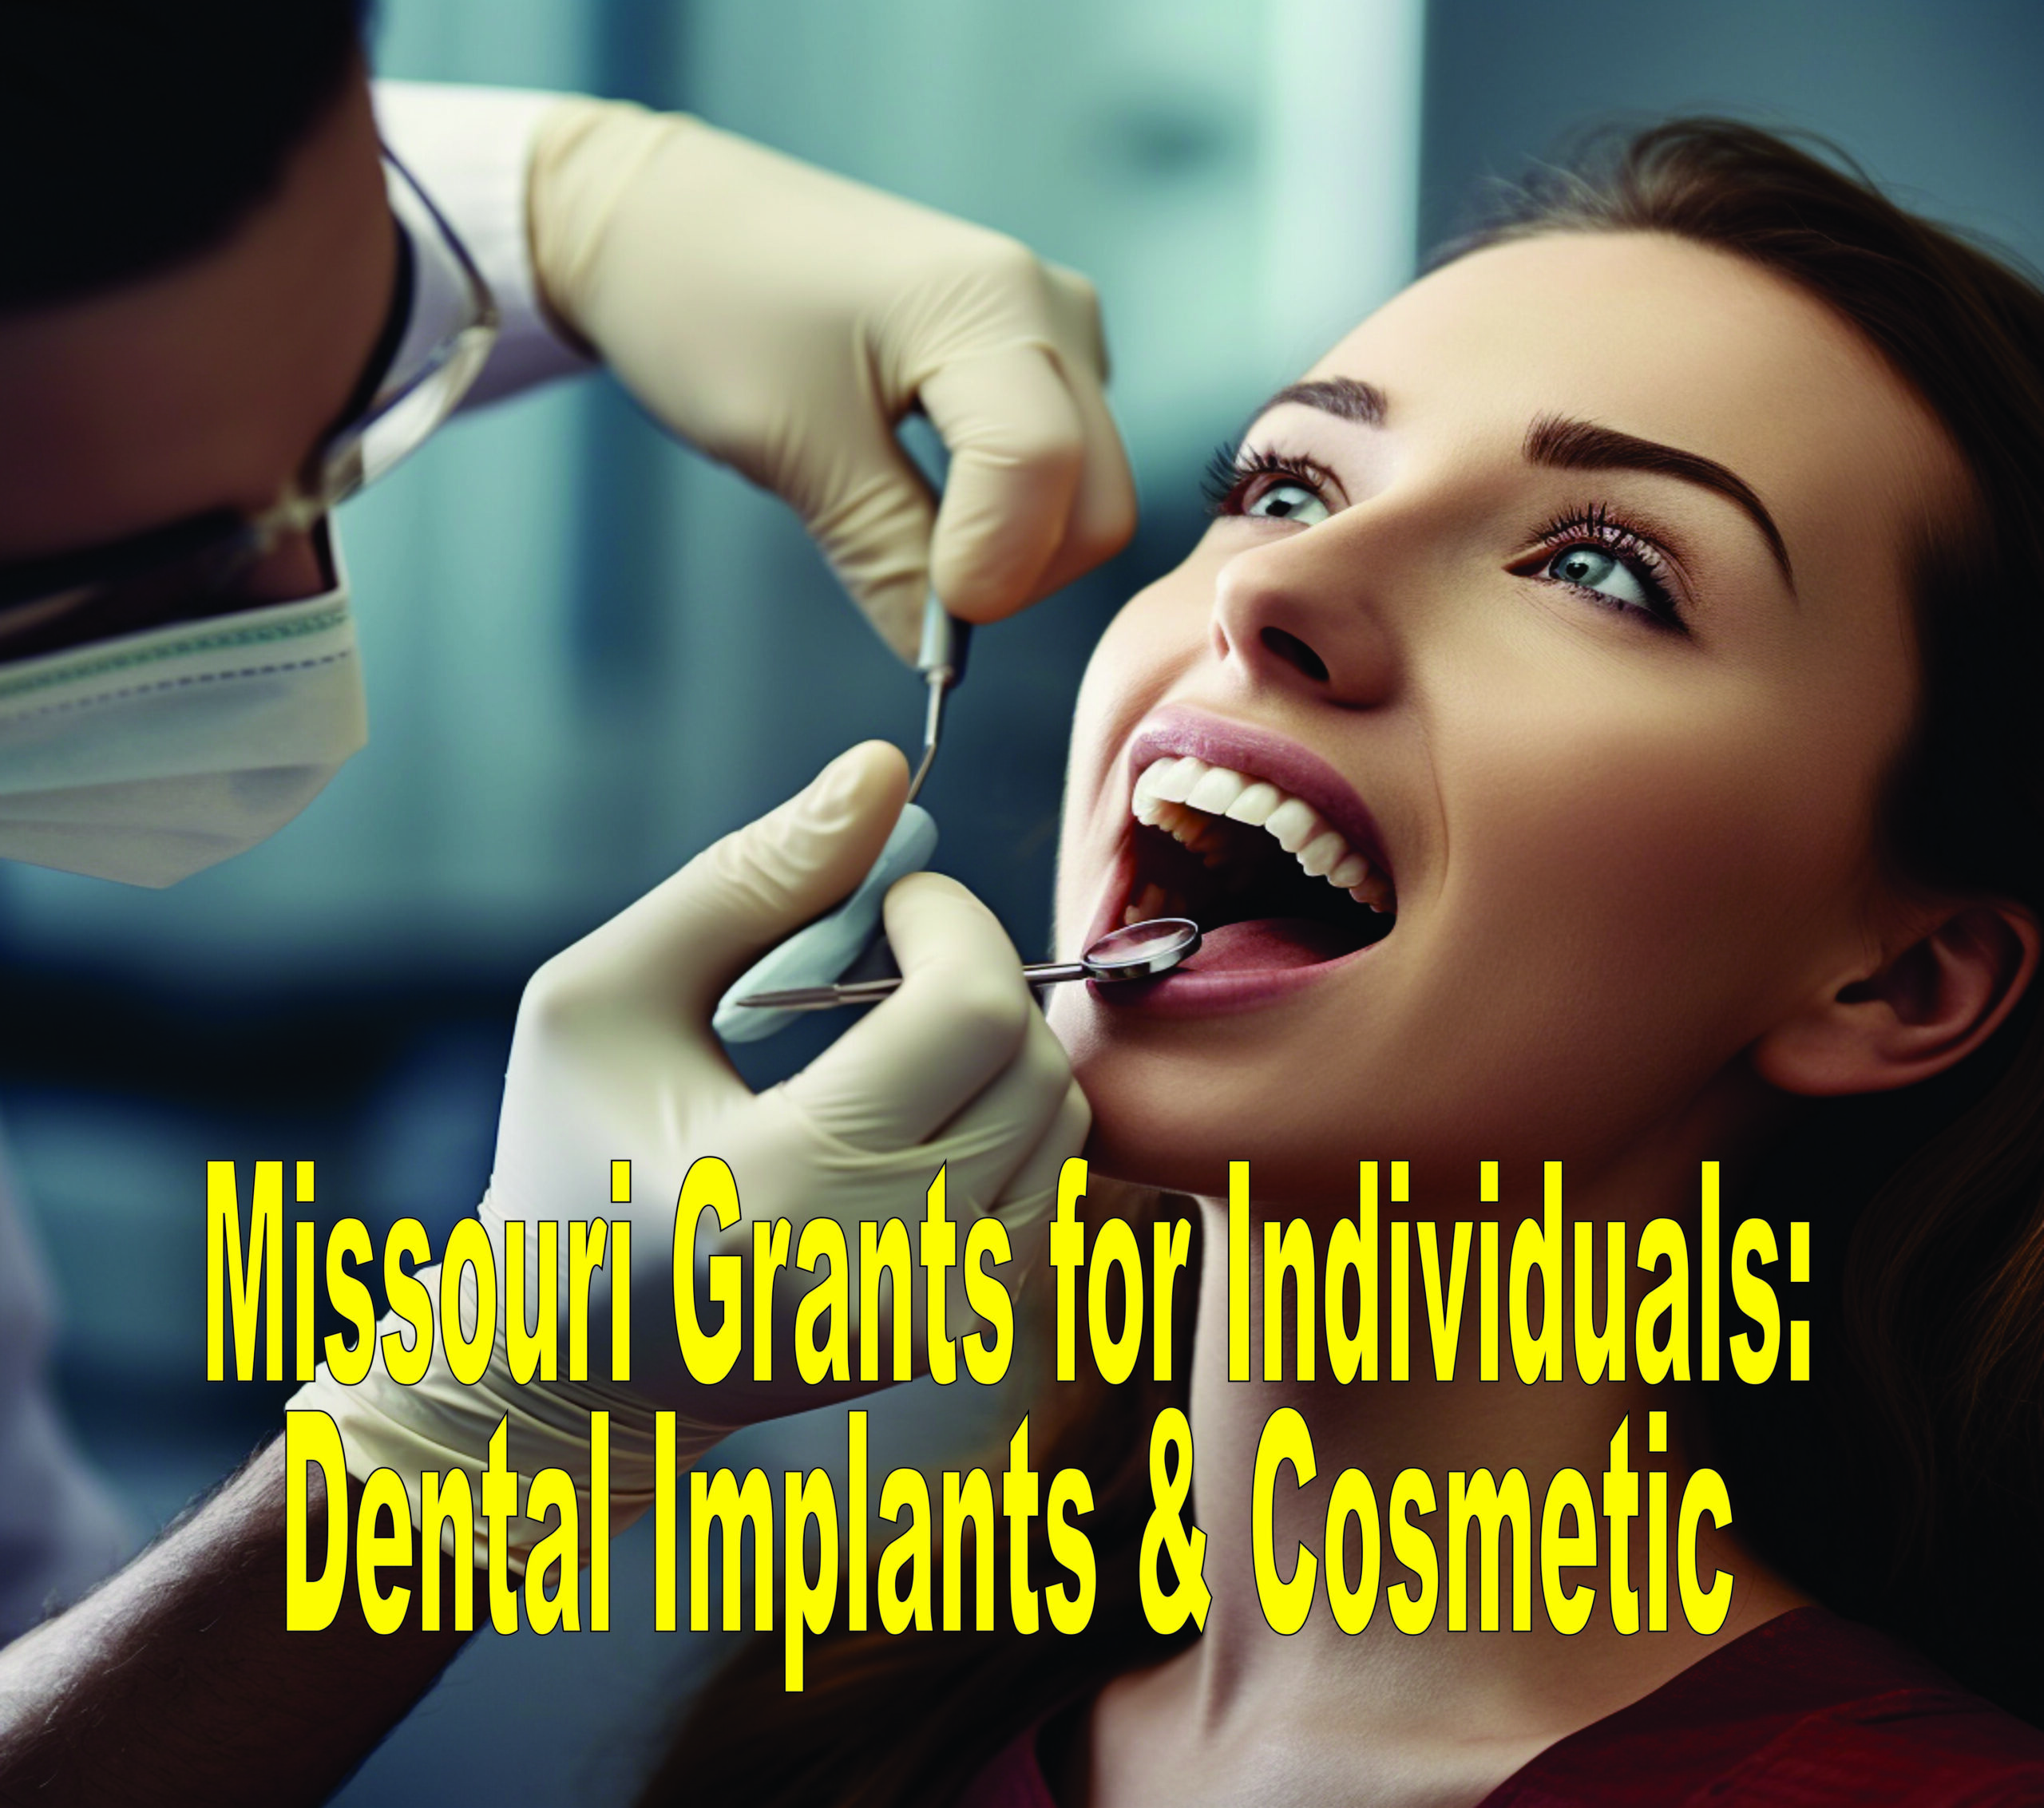 Missouri Grants For Individuals Dental Implants & Cosmetic